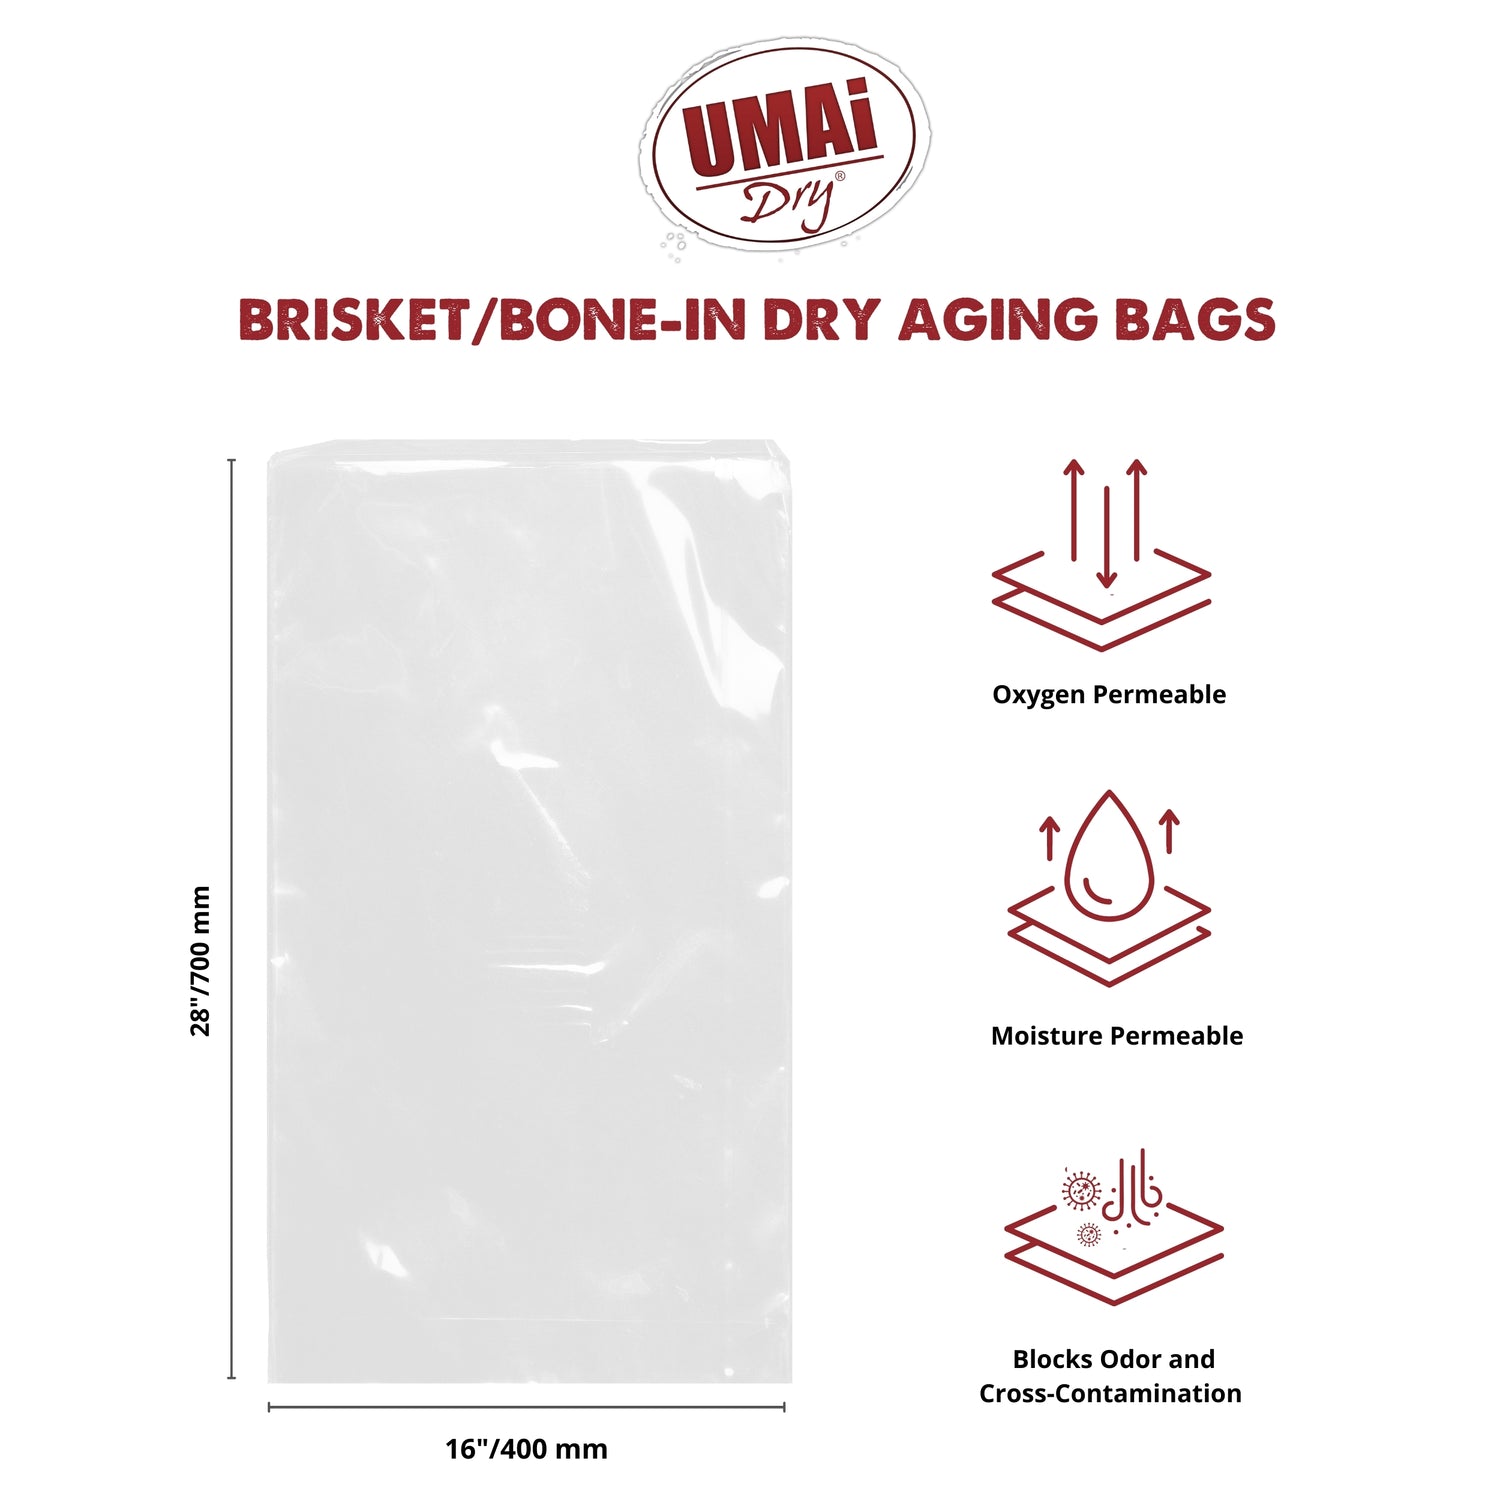 UMAI Dry Aging Brisket/Bone-in Bags - UMAi Dry